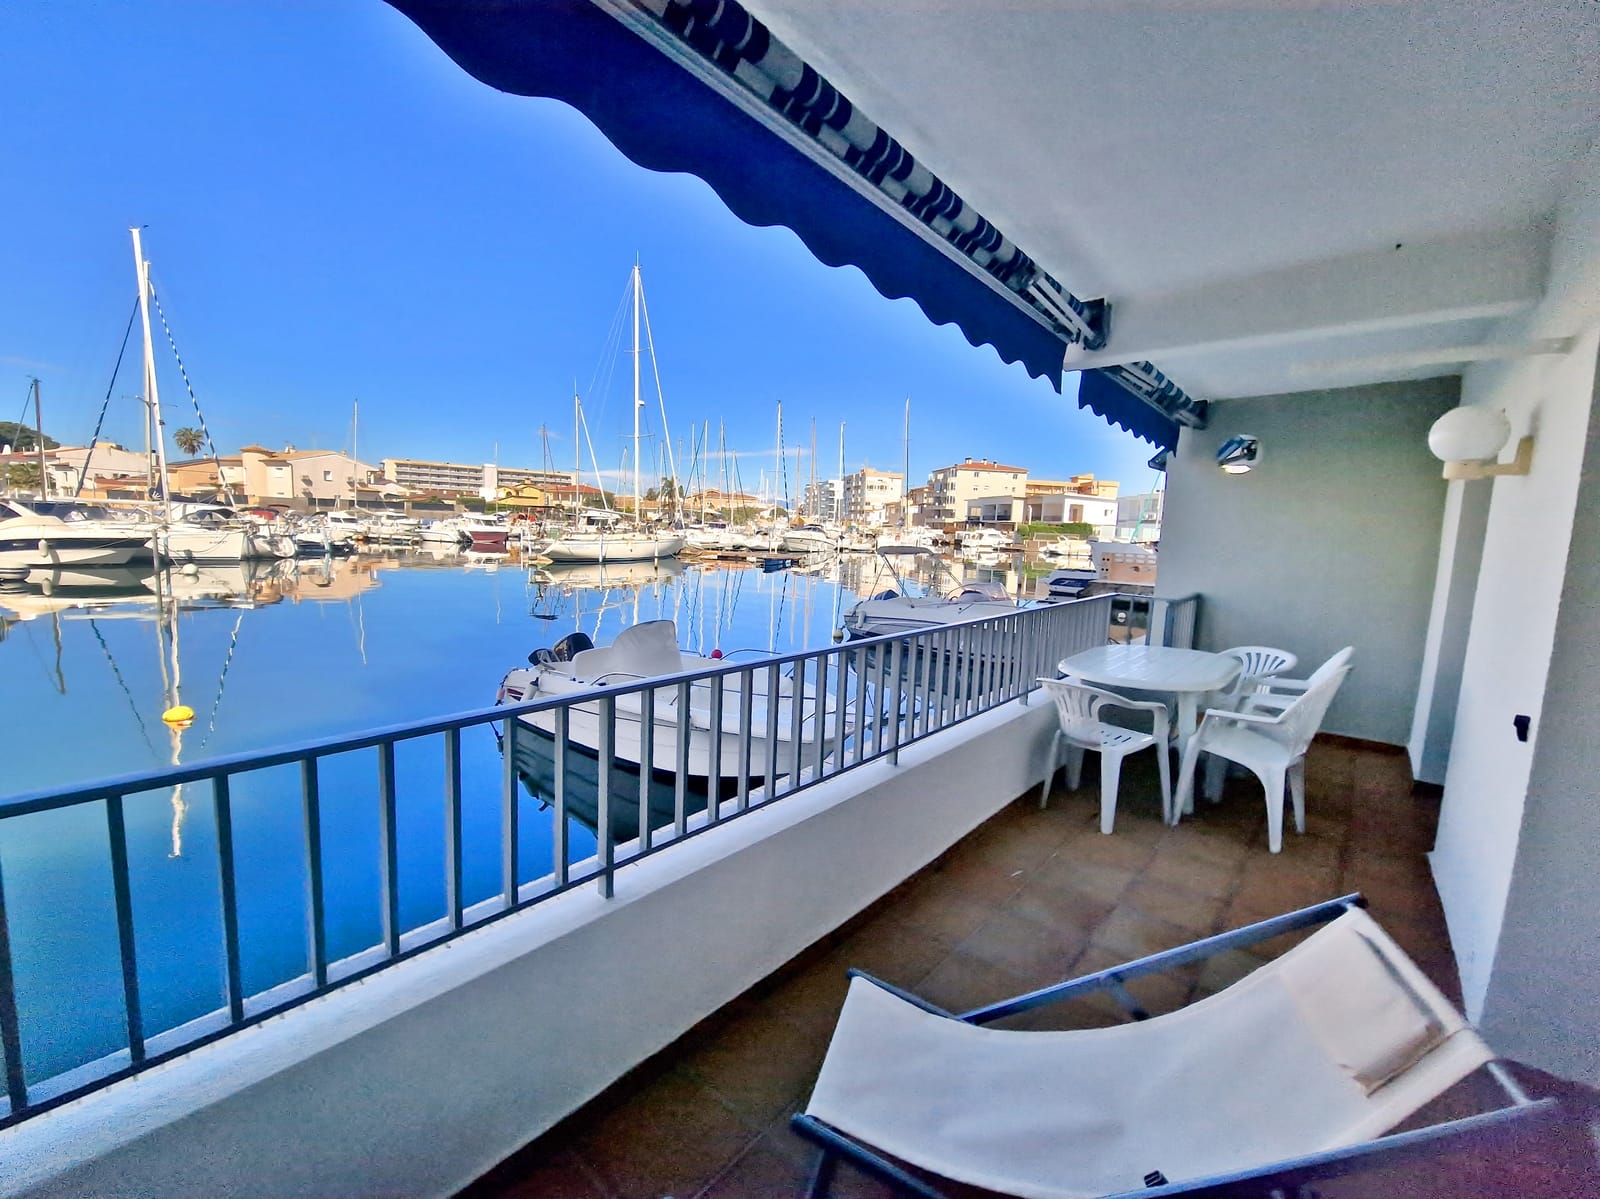 Exclusivity Roses - Apartment marina view, shared parking + mooring, beach 500m